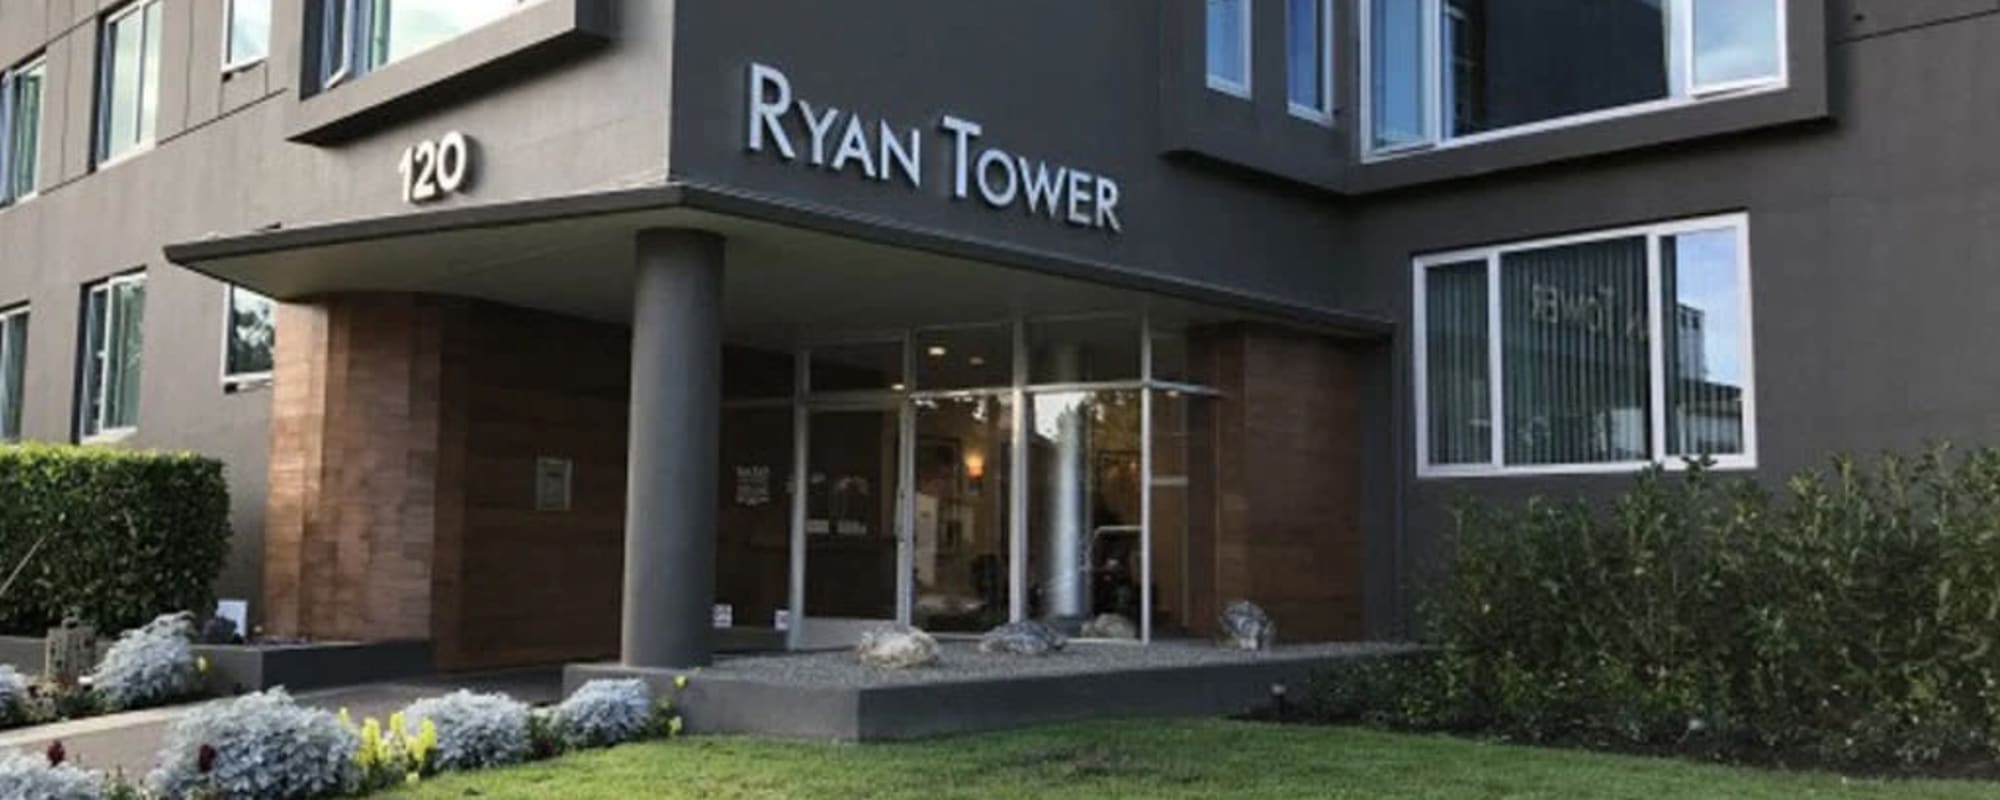 Entrance to Ryan Tower in San Mateo, California